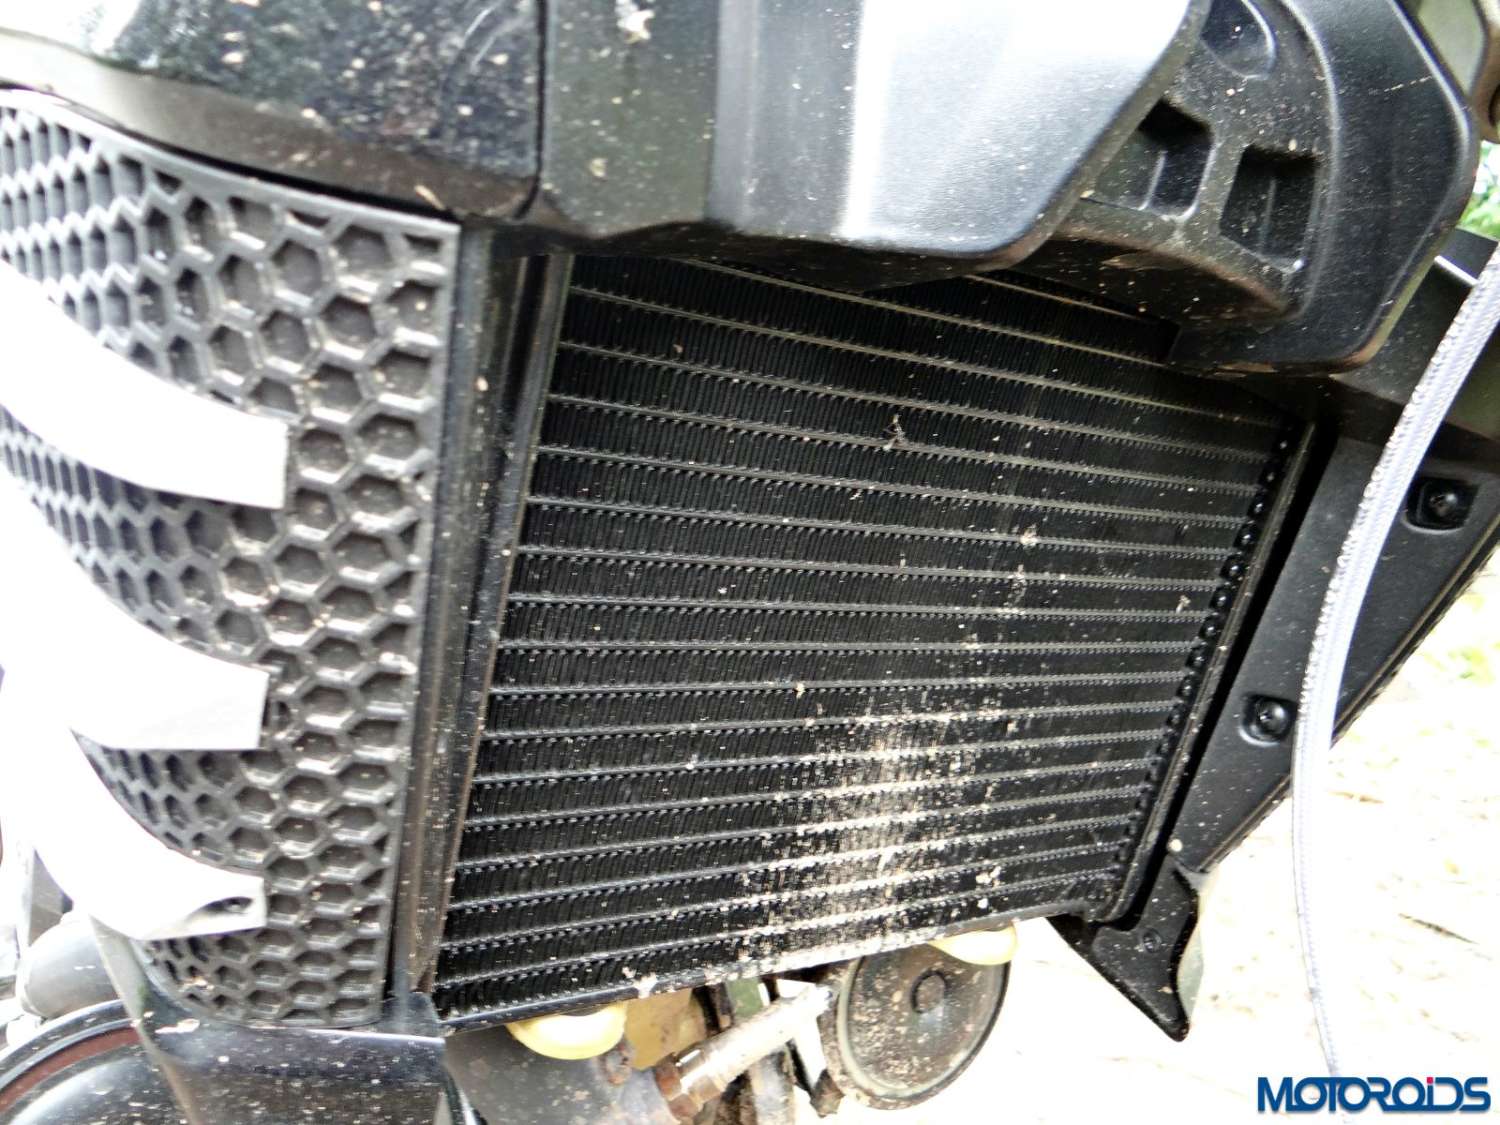 Mahindra-Mojo-First-Ride-Review-Details-Radiator-2